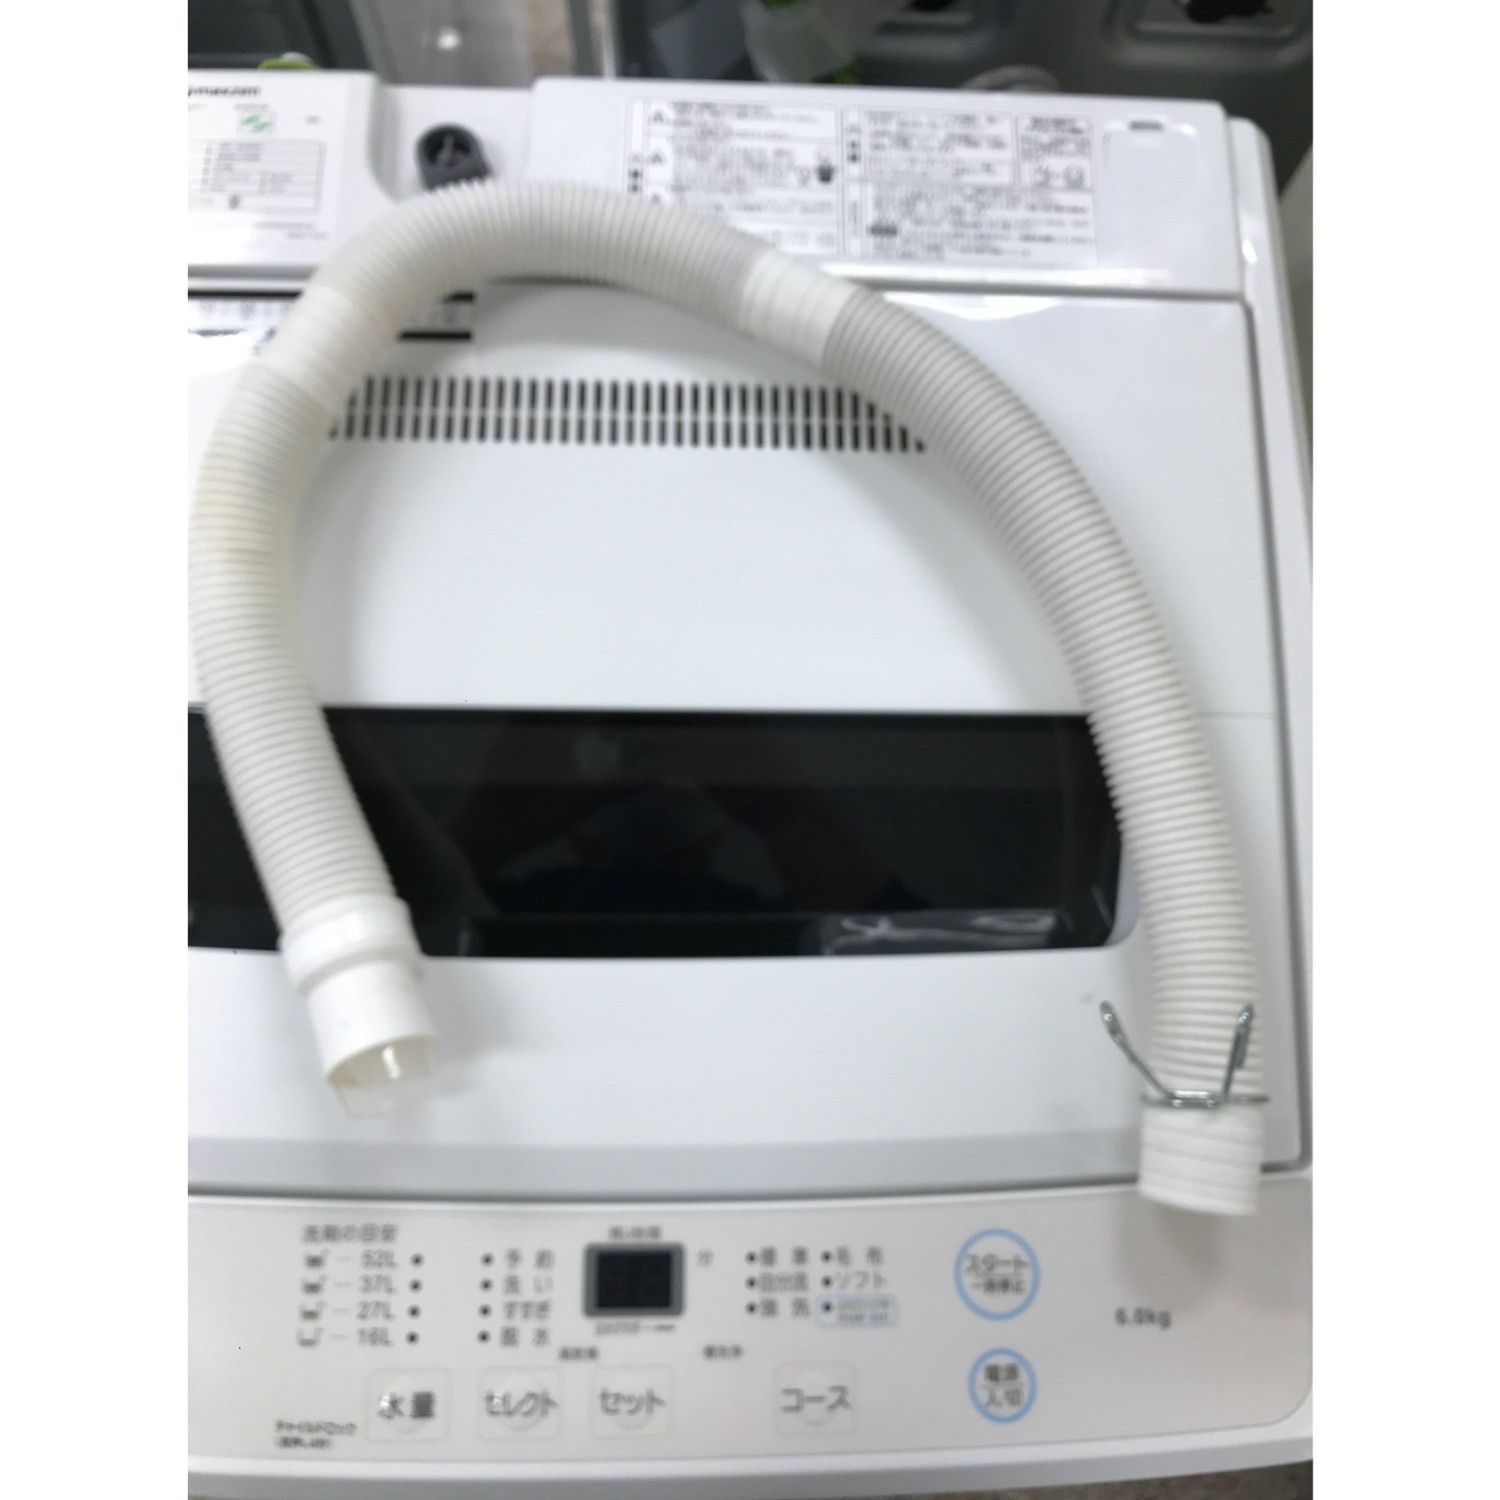 maxzen (マクスゼン) 全自動洗濯機 6.0kg JW60WP01 2019年製 50Hz 